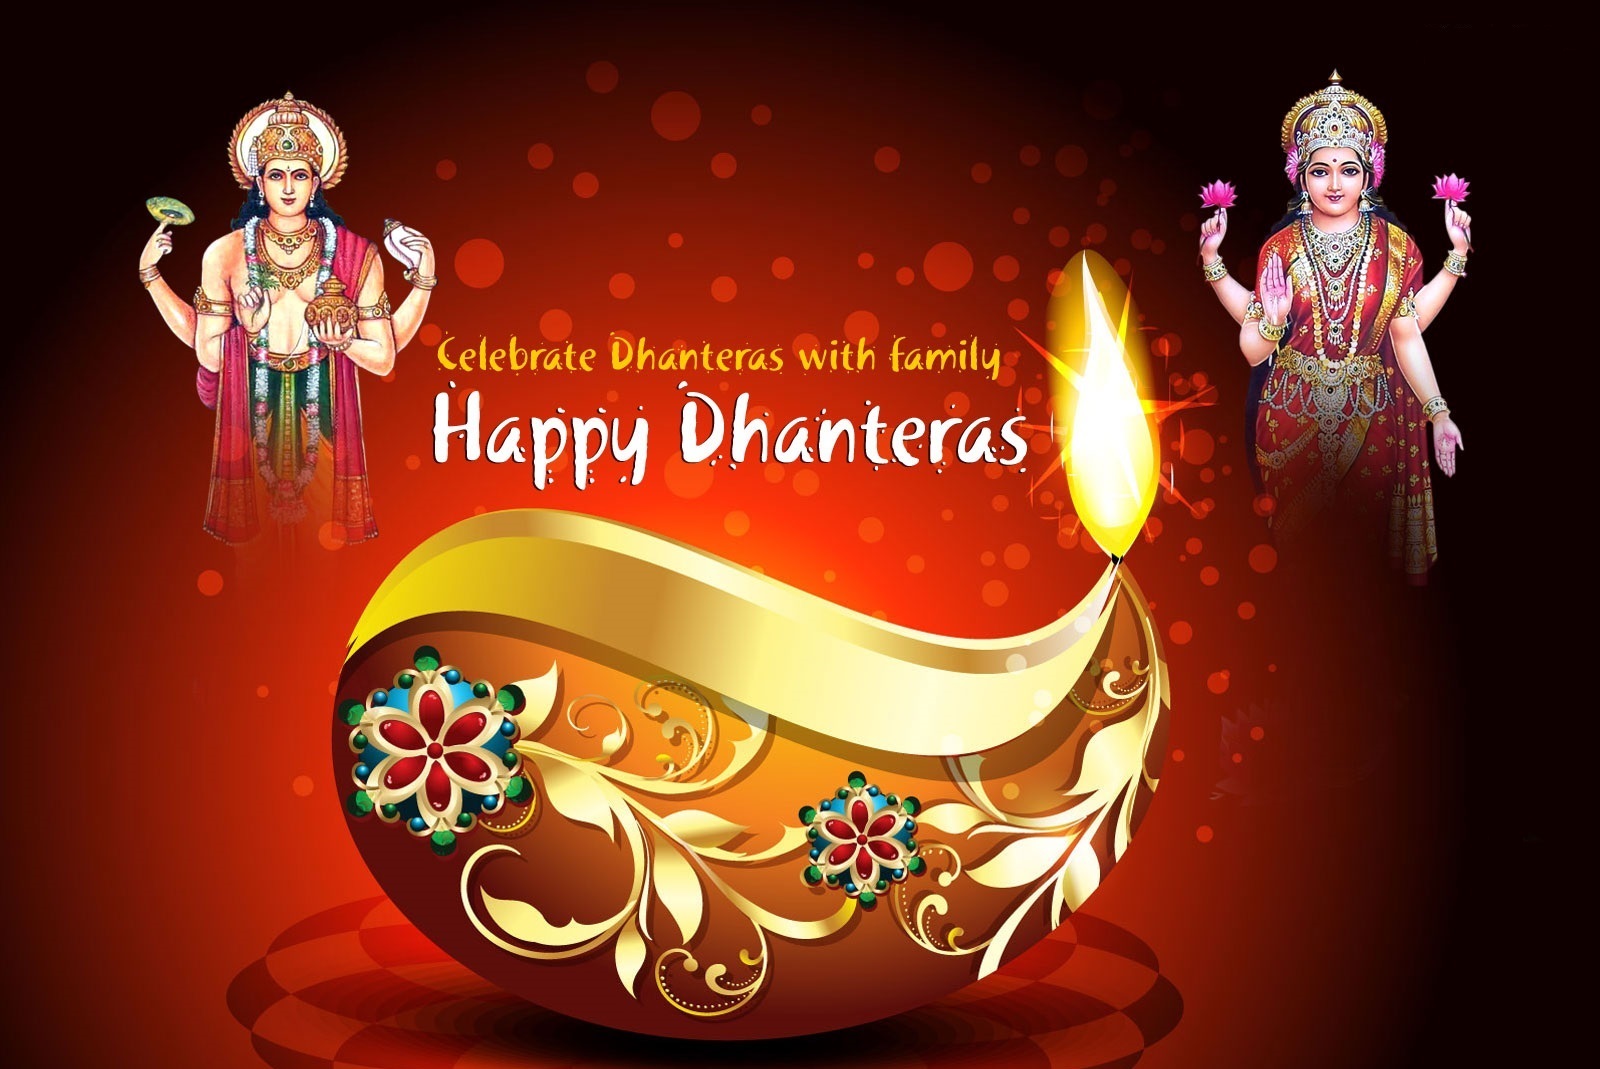 Happy Dhanteras 2019: Download Images